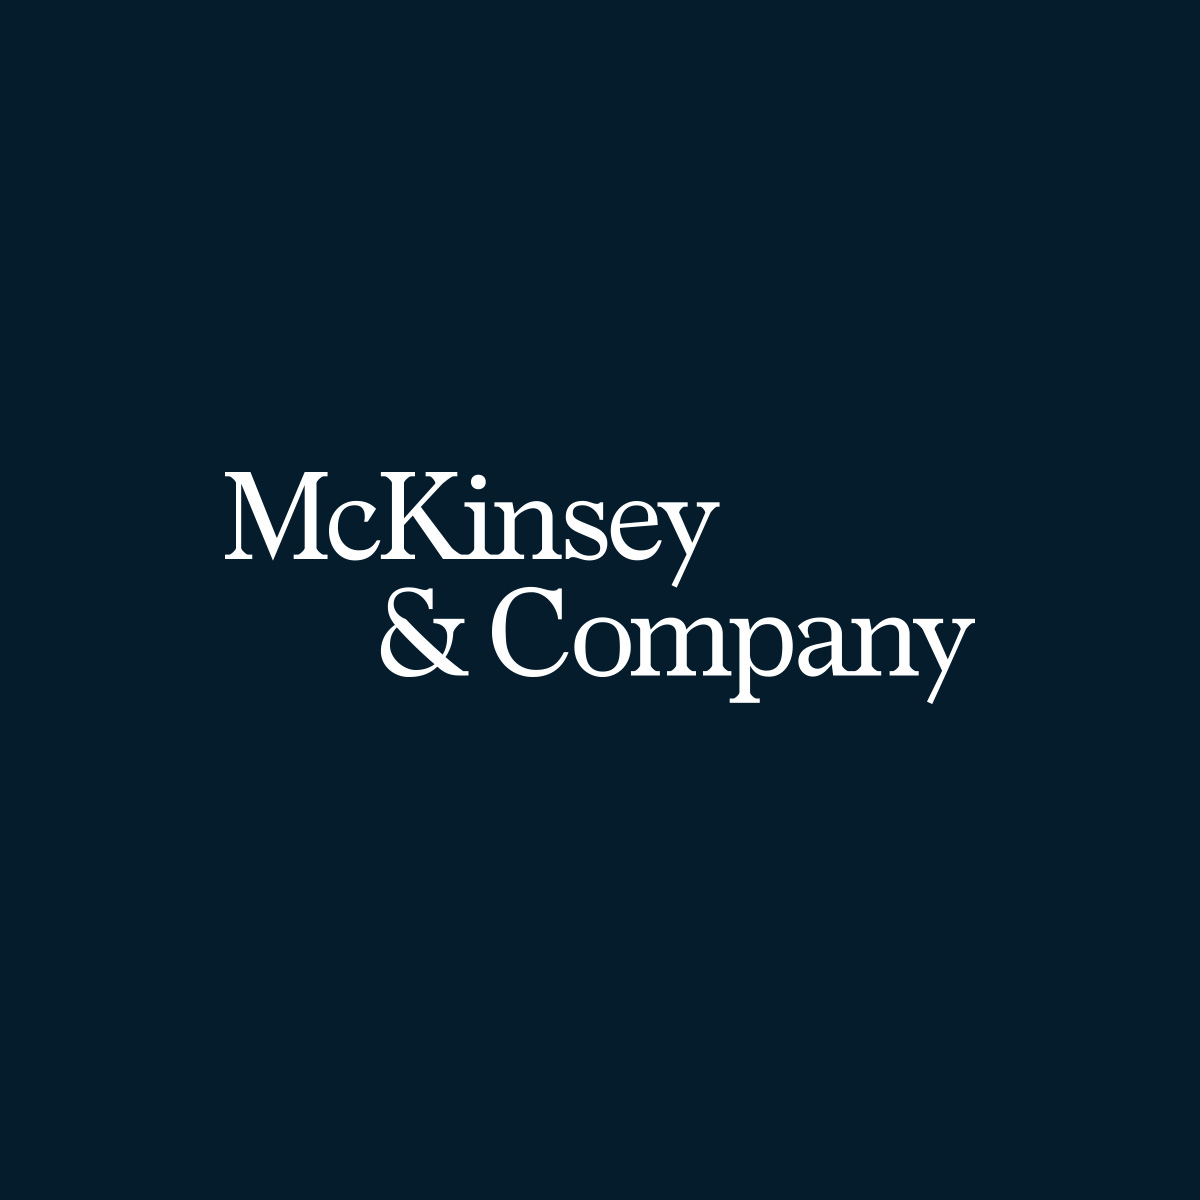 McKinsey Global Services